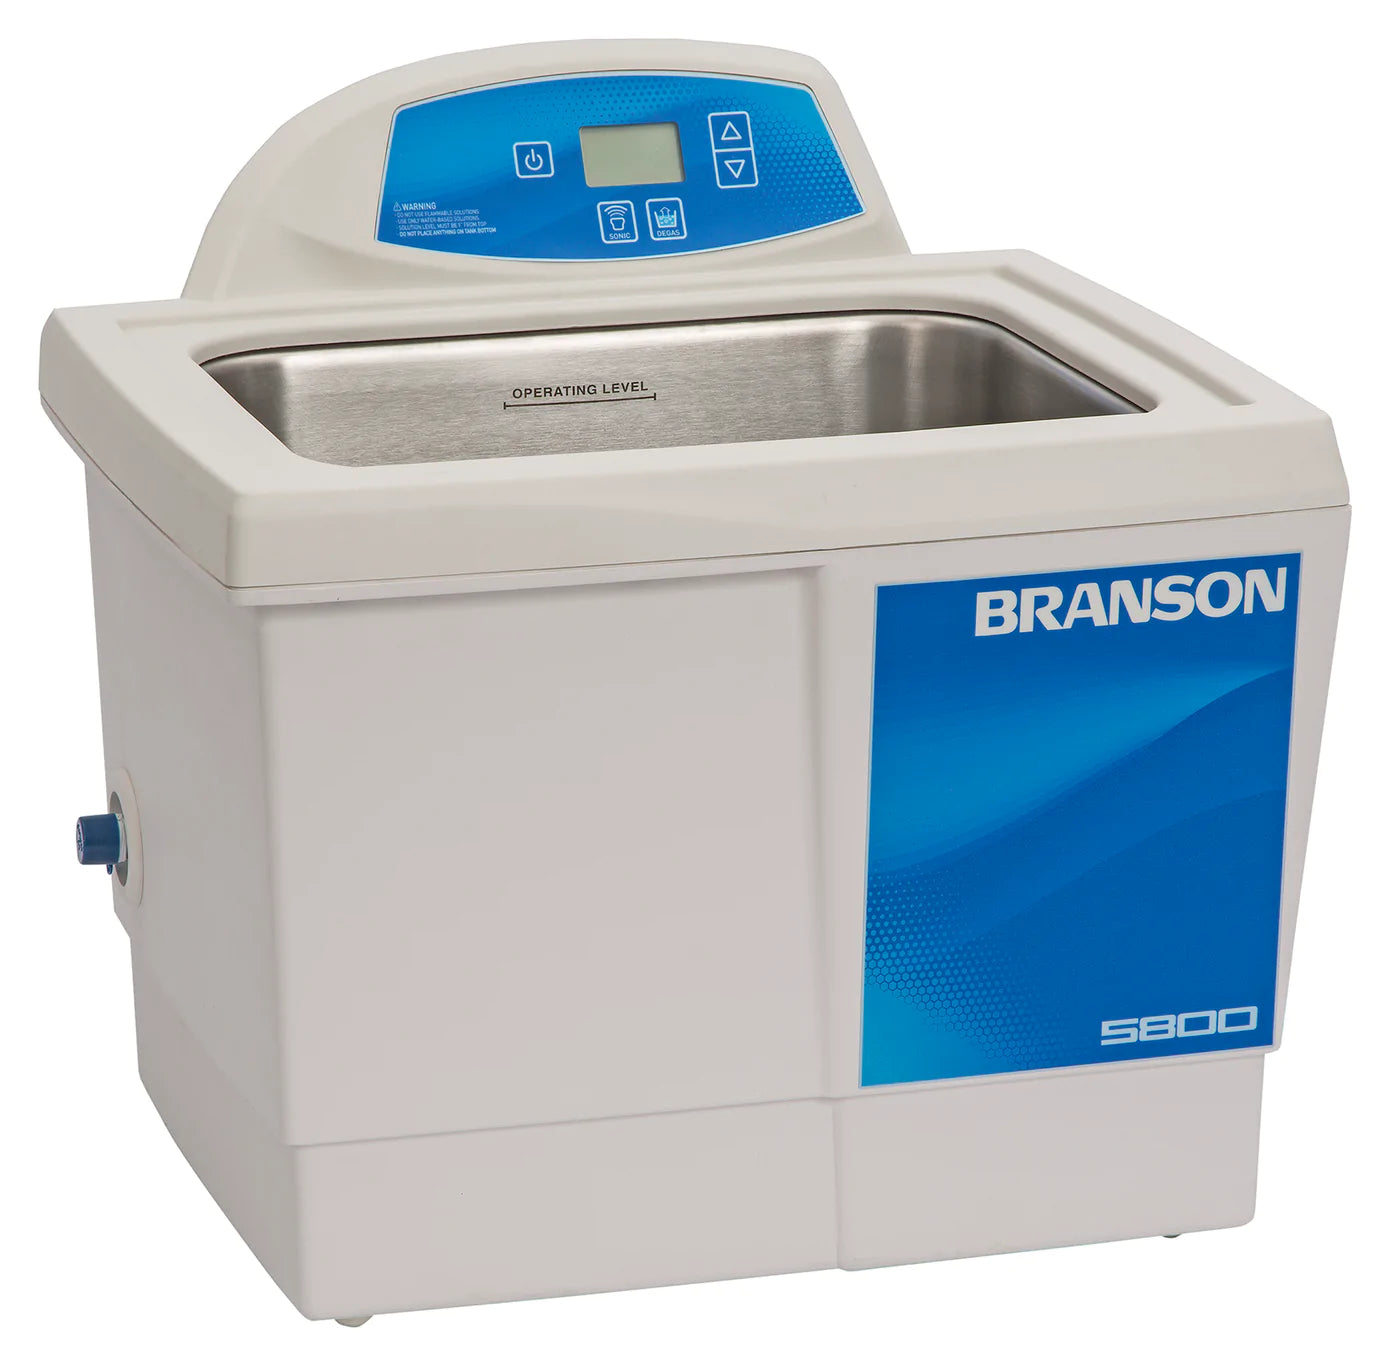 branson-cpx3800-1-5gal-ultrasonic-cleaner-no-heat-115v-60hz-cpx-952-319r